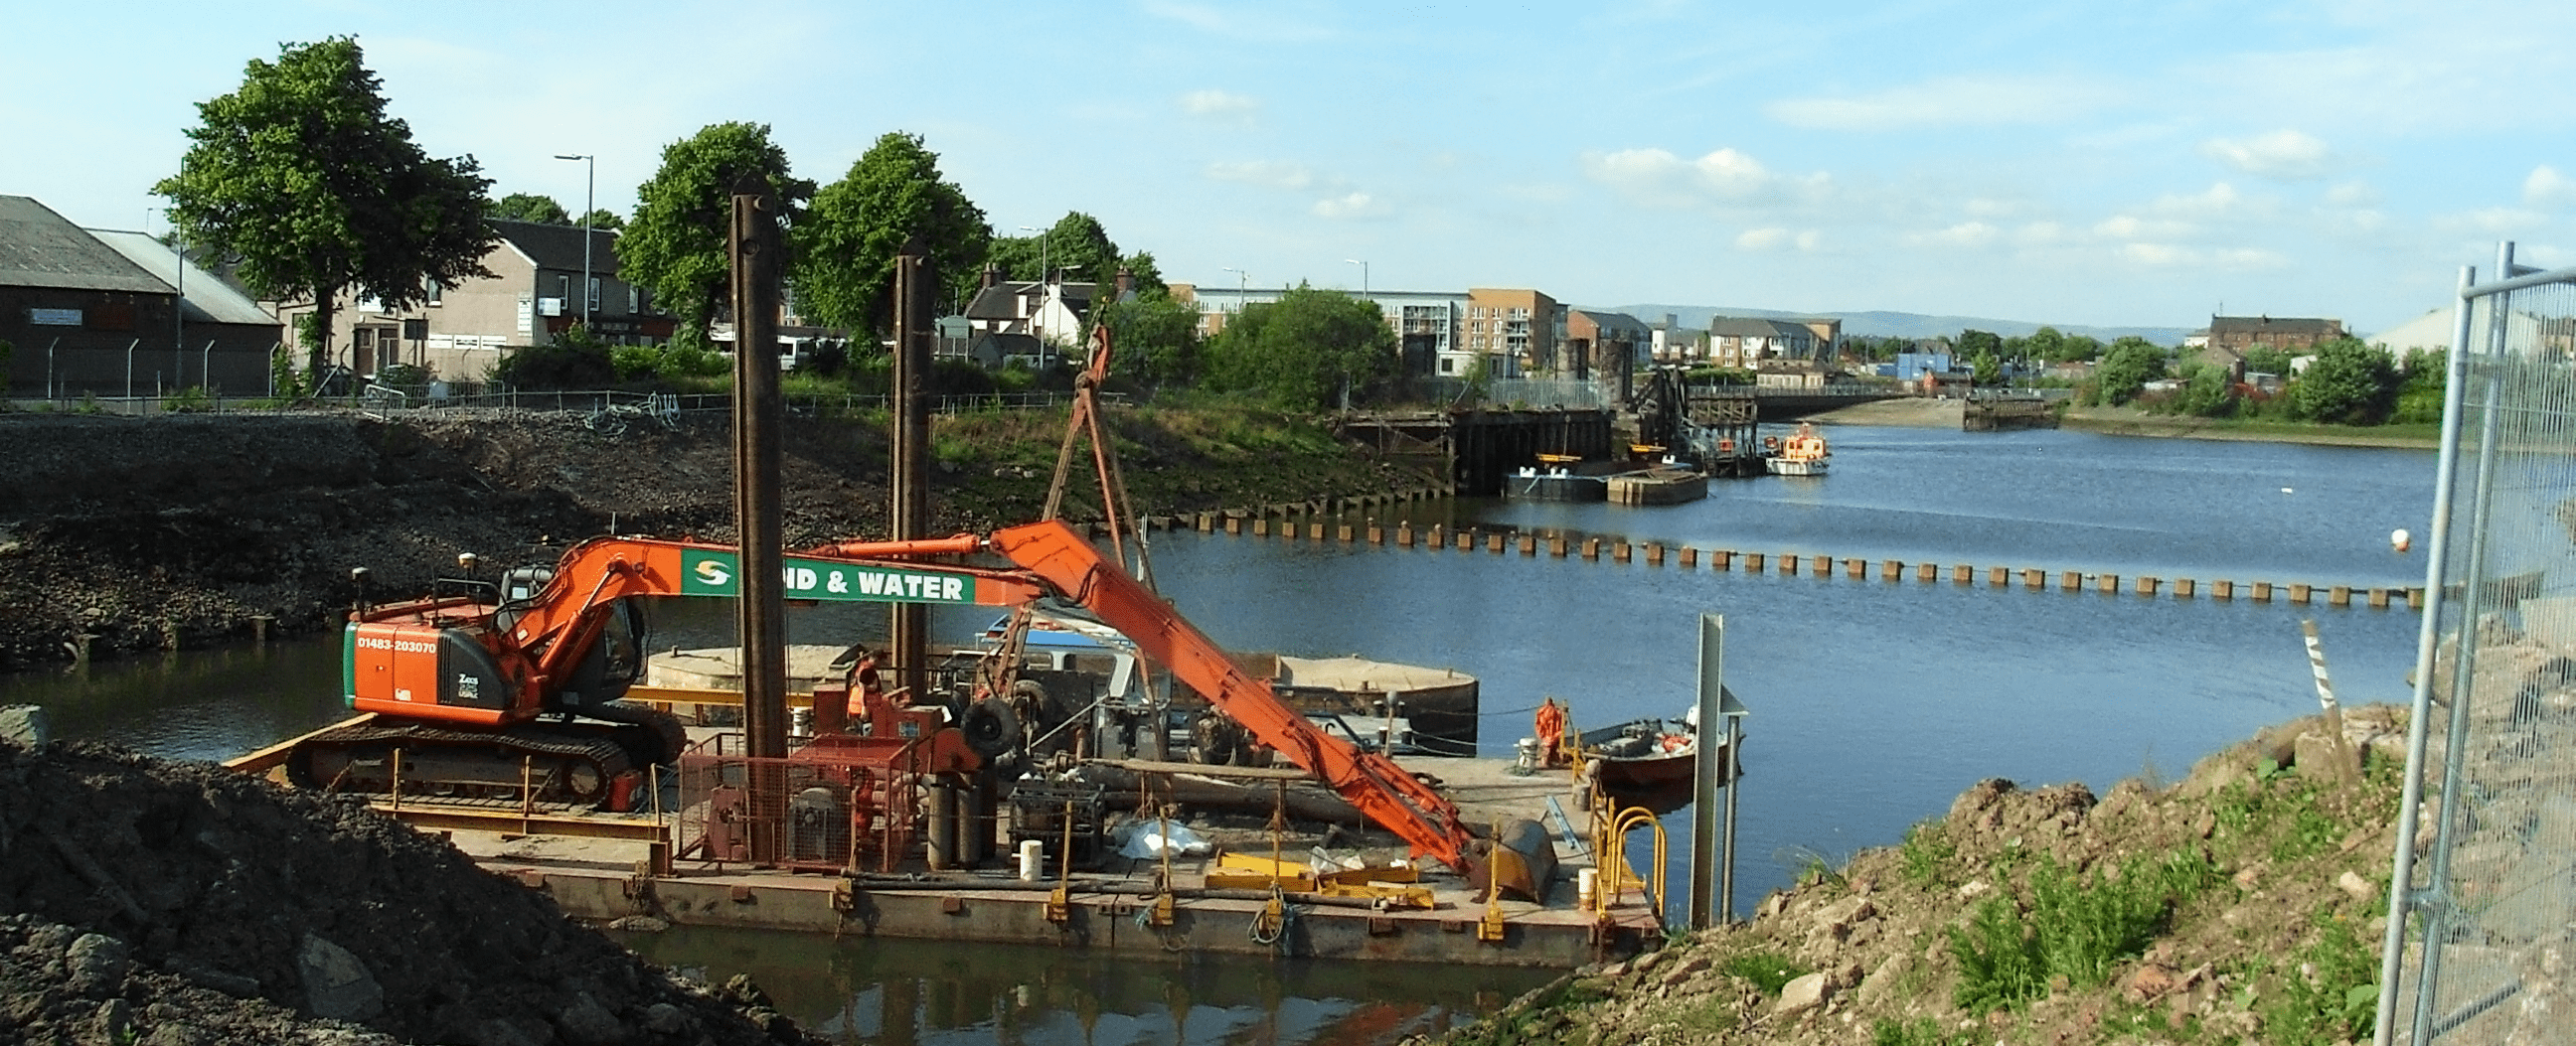 Excavator mounted on barge for dredging at Puzeoch basin